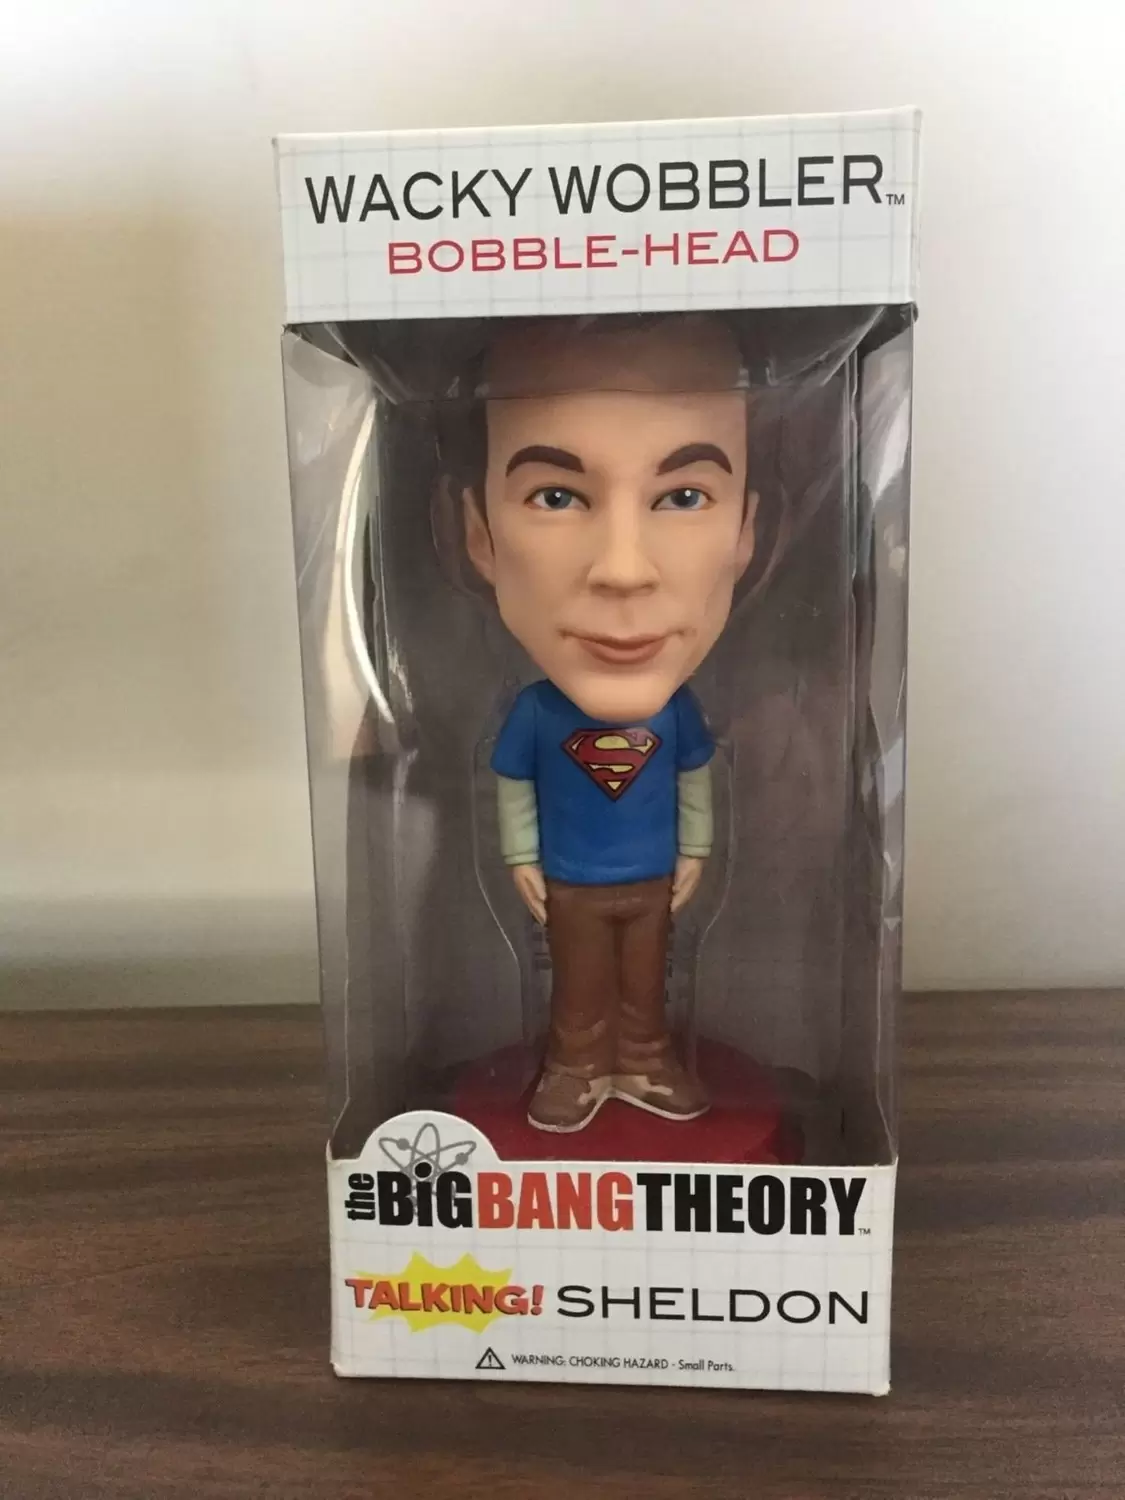 Wacky Wobbler TV Shows - The Big Bang Theory - Sheldon Superman Blue Shirt Talking